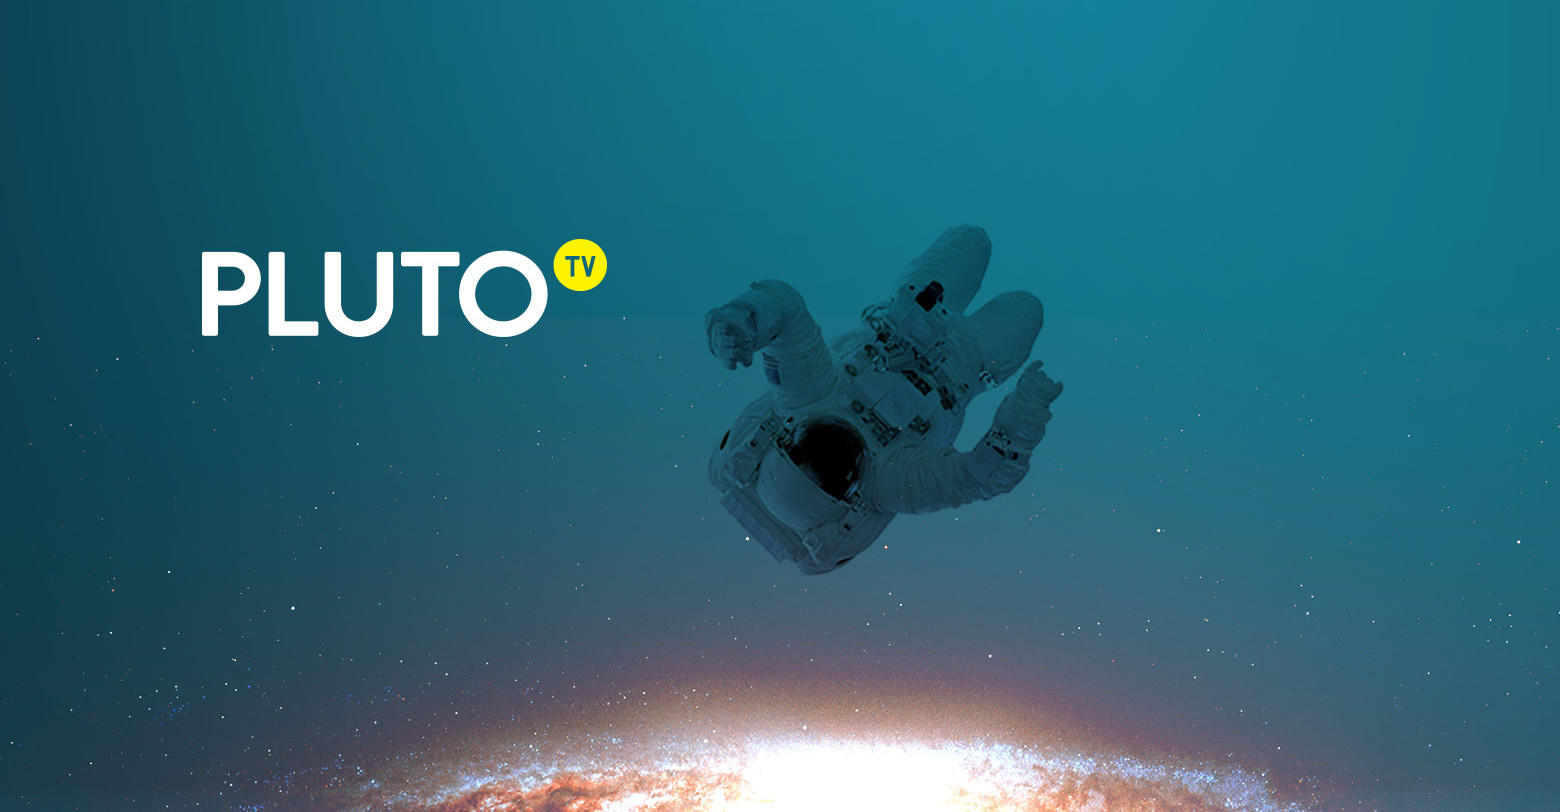 Pluto TV promo image of astronaut in space